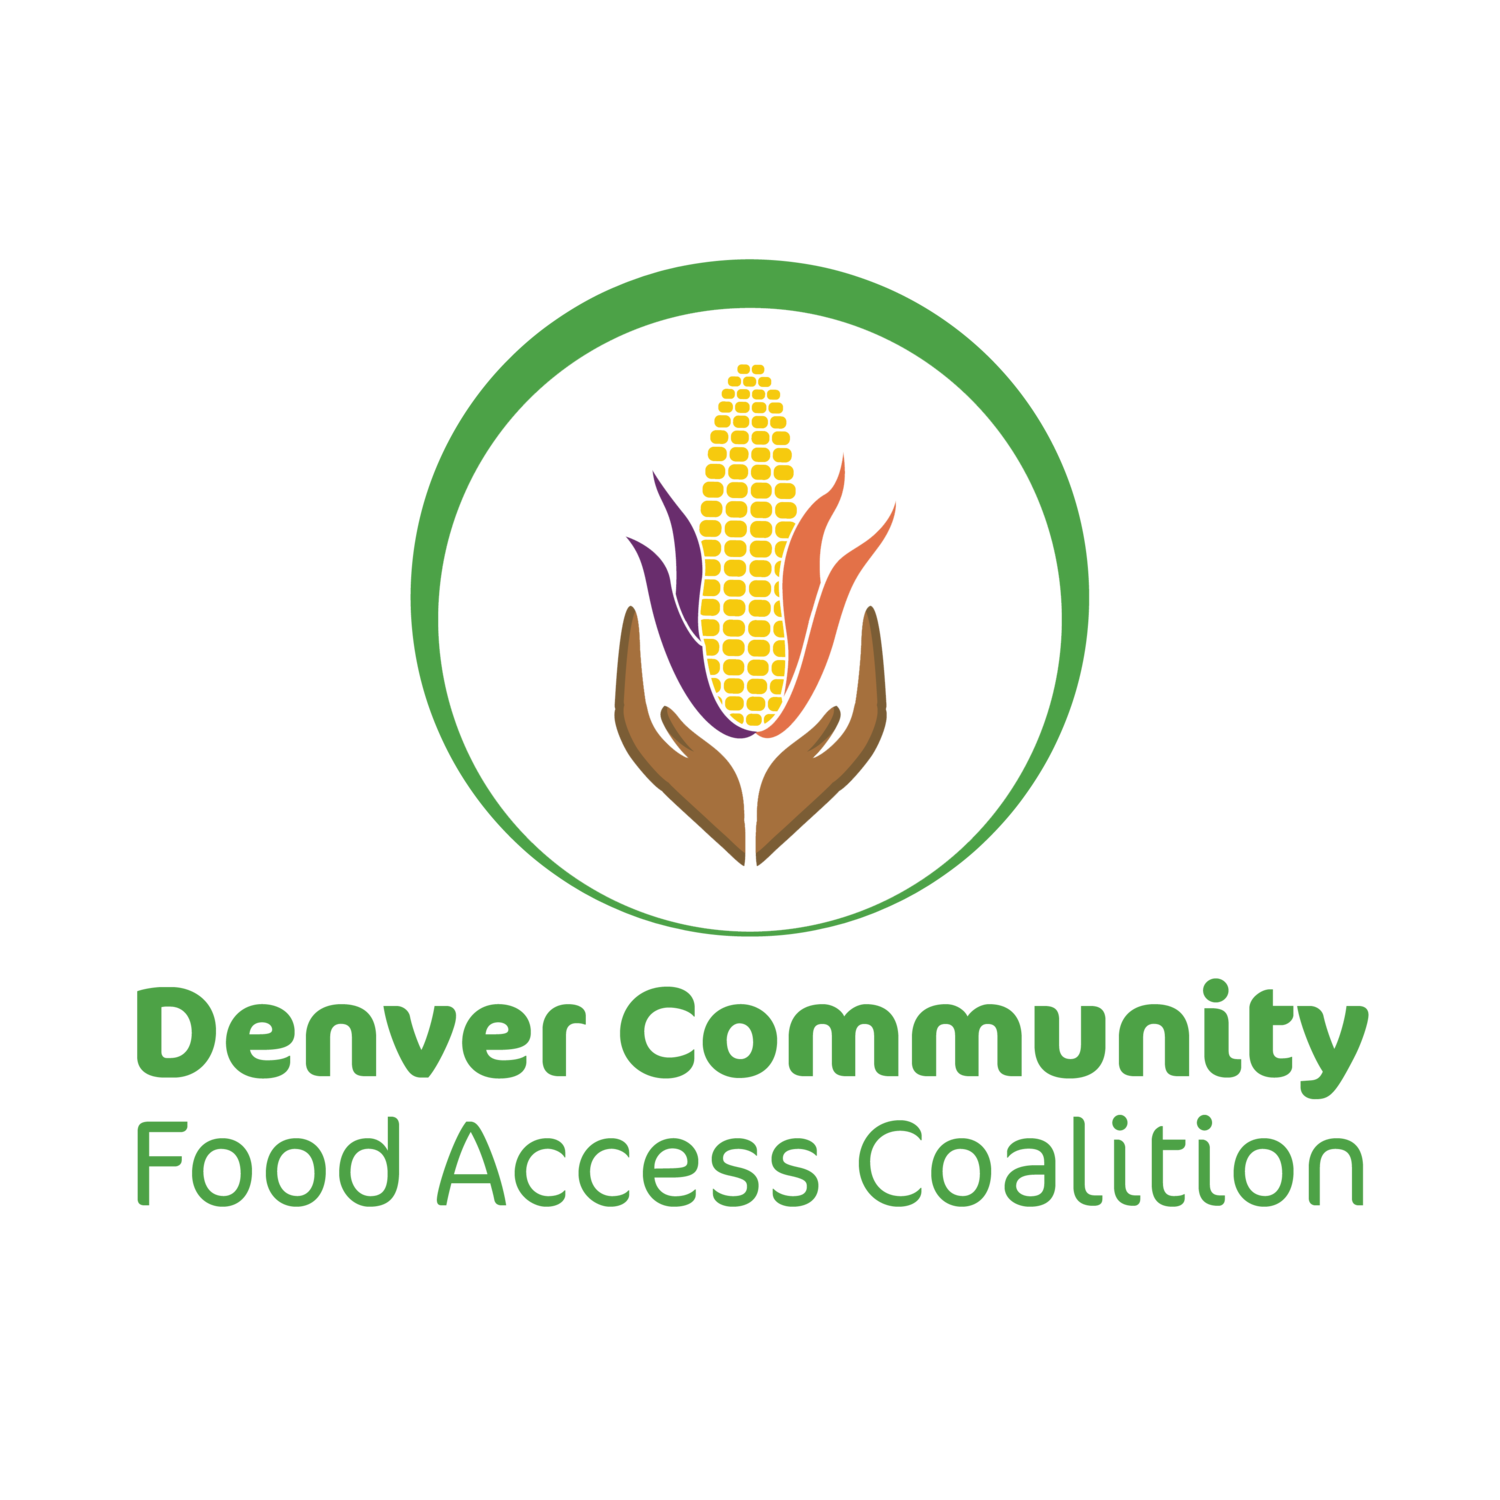 Denver Community Food Access Coalition